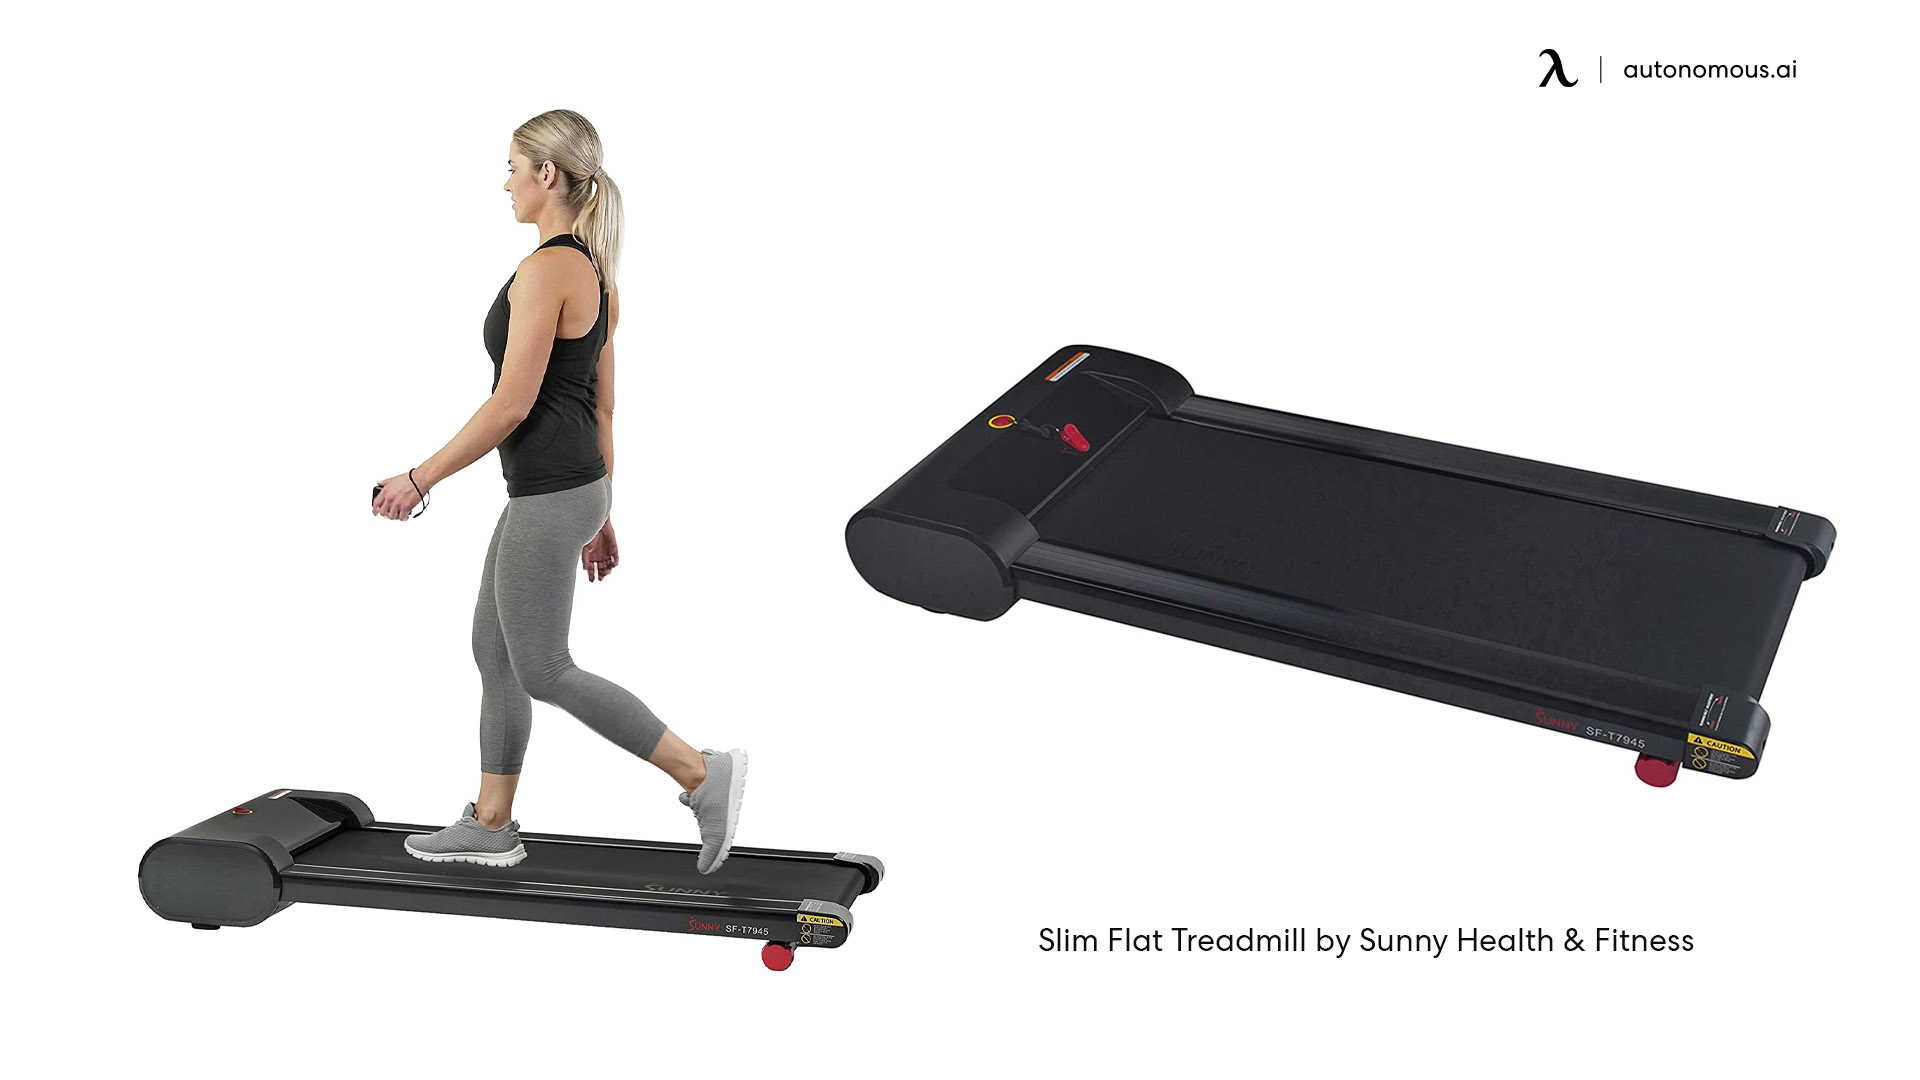 Walkstation Slim Flat Treadmill from Sunny Health and Fitness